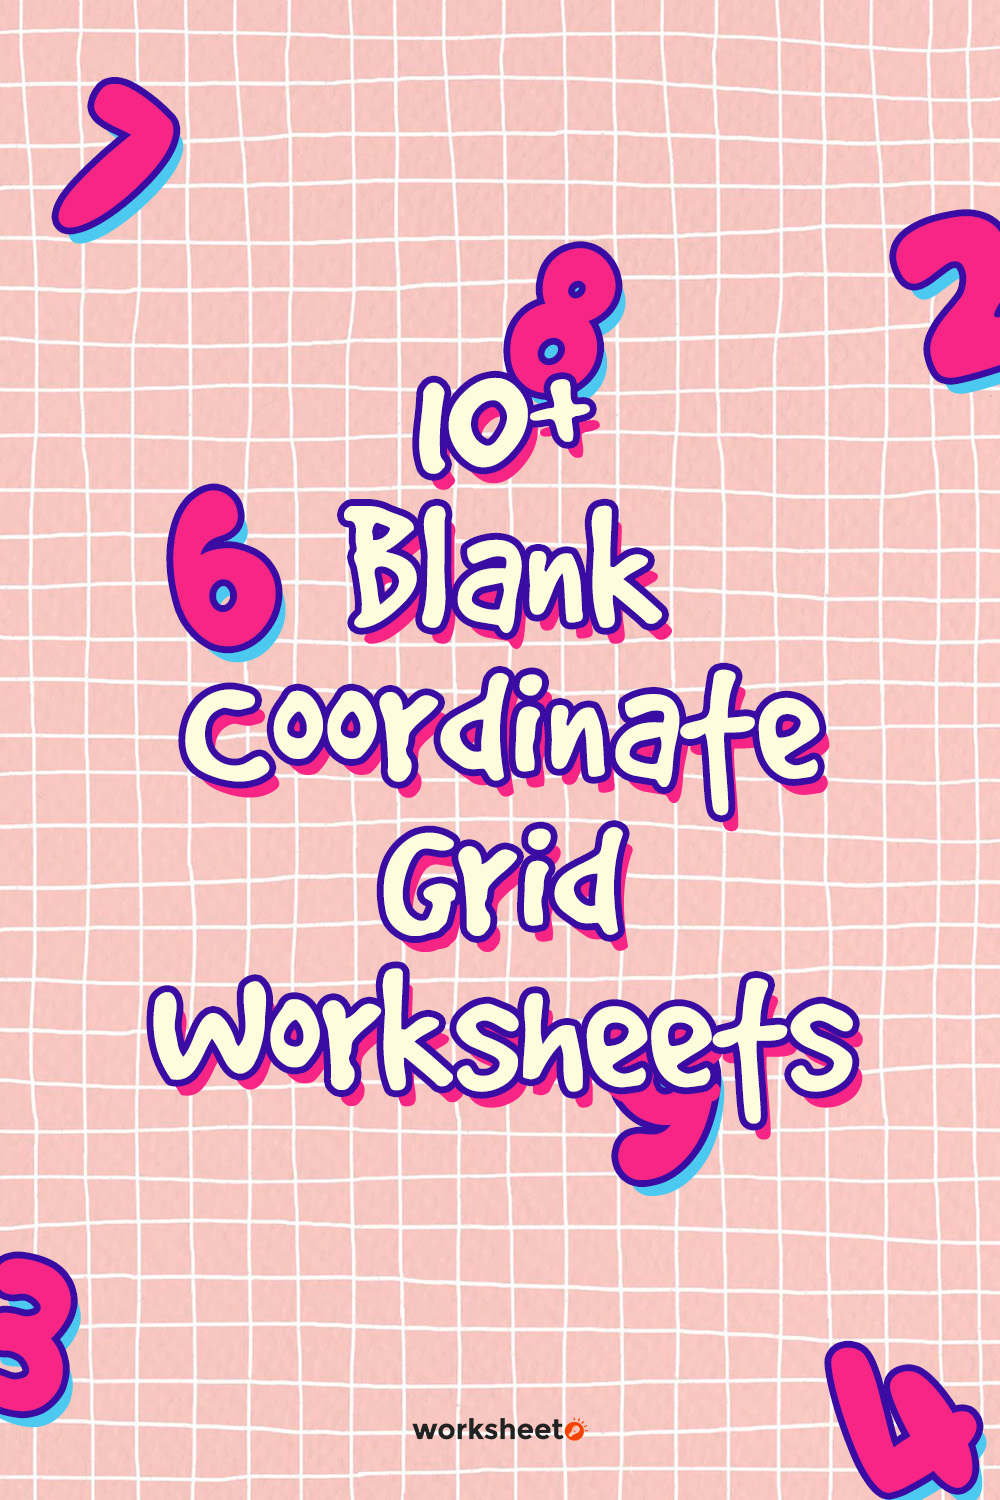 13 Images of Blank Coordinate Grid Worksheets